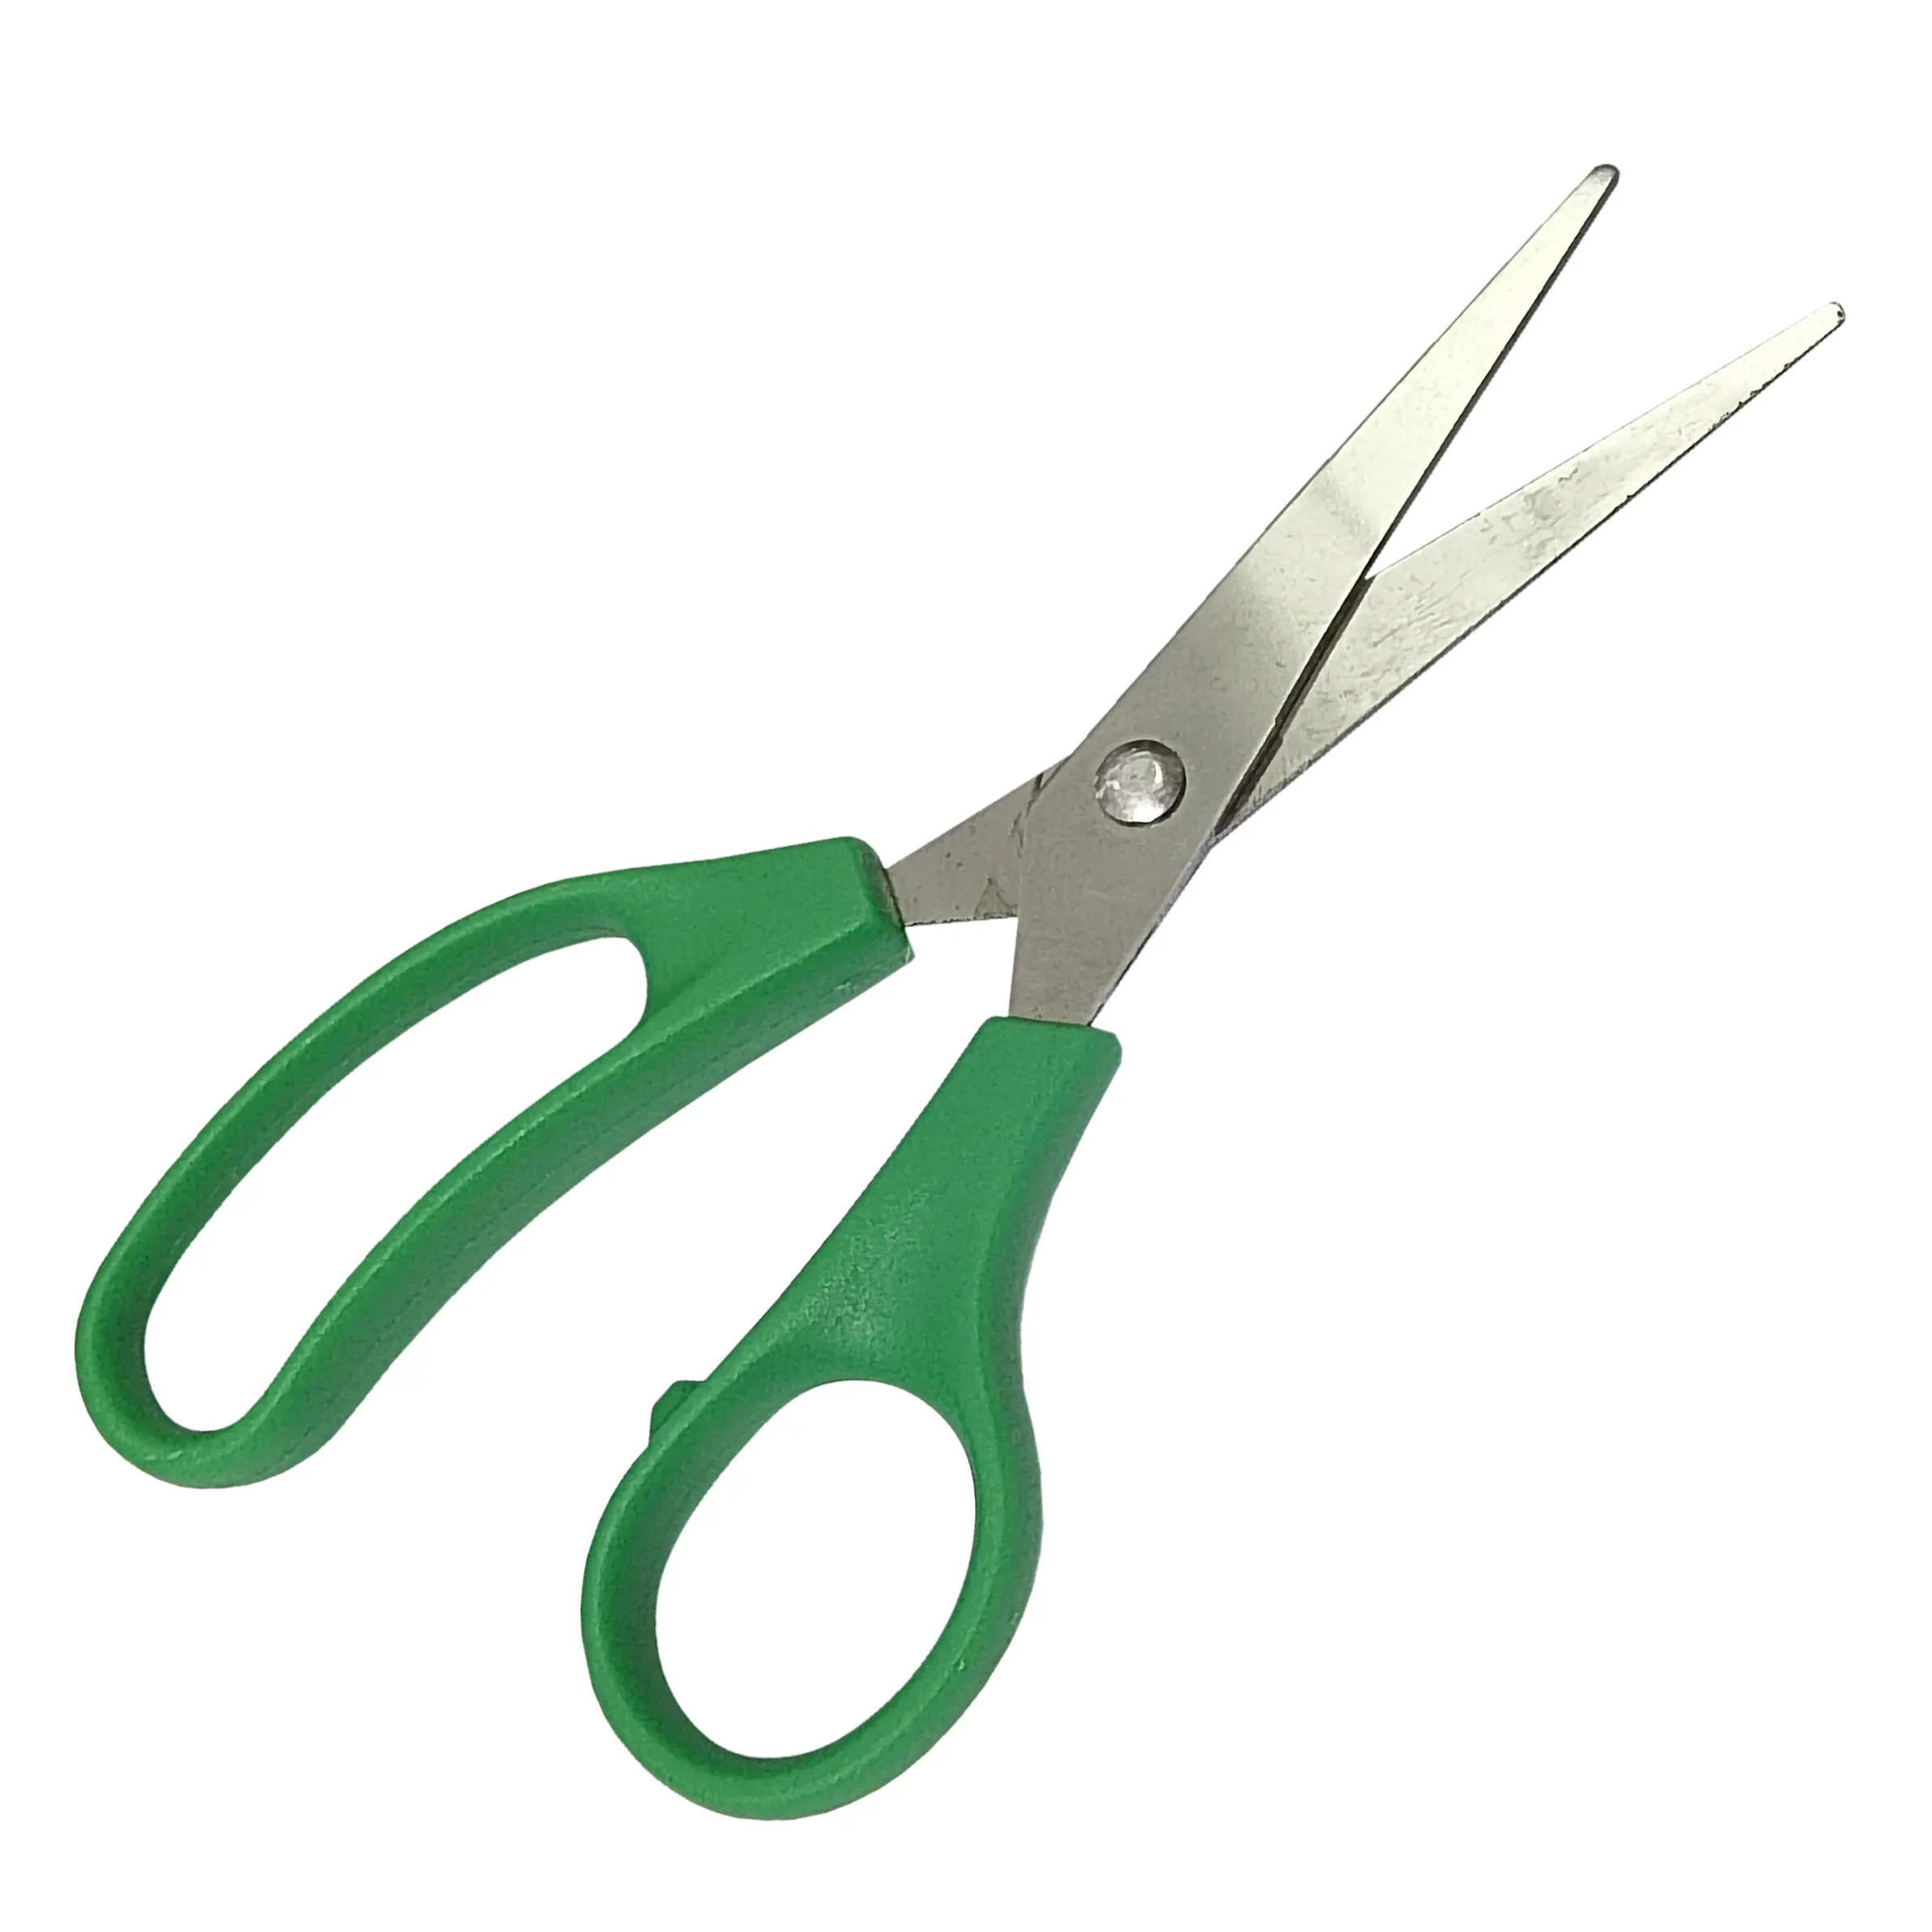 Student Paper Scissors Plastic Handle High Quality green